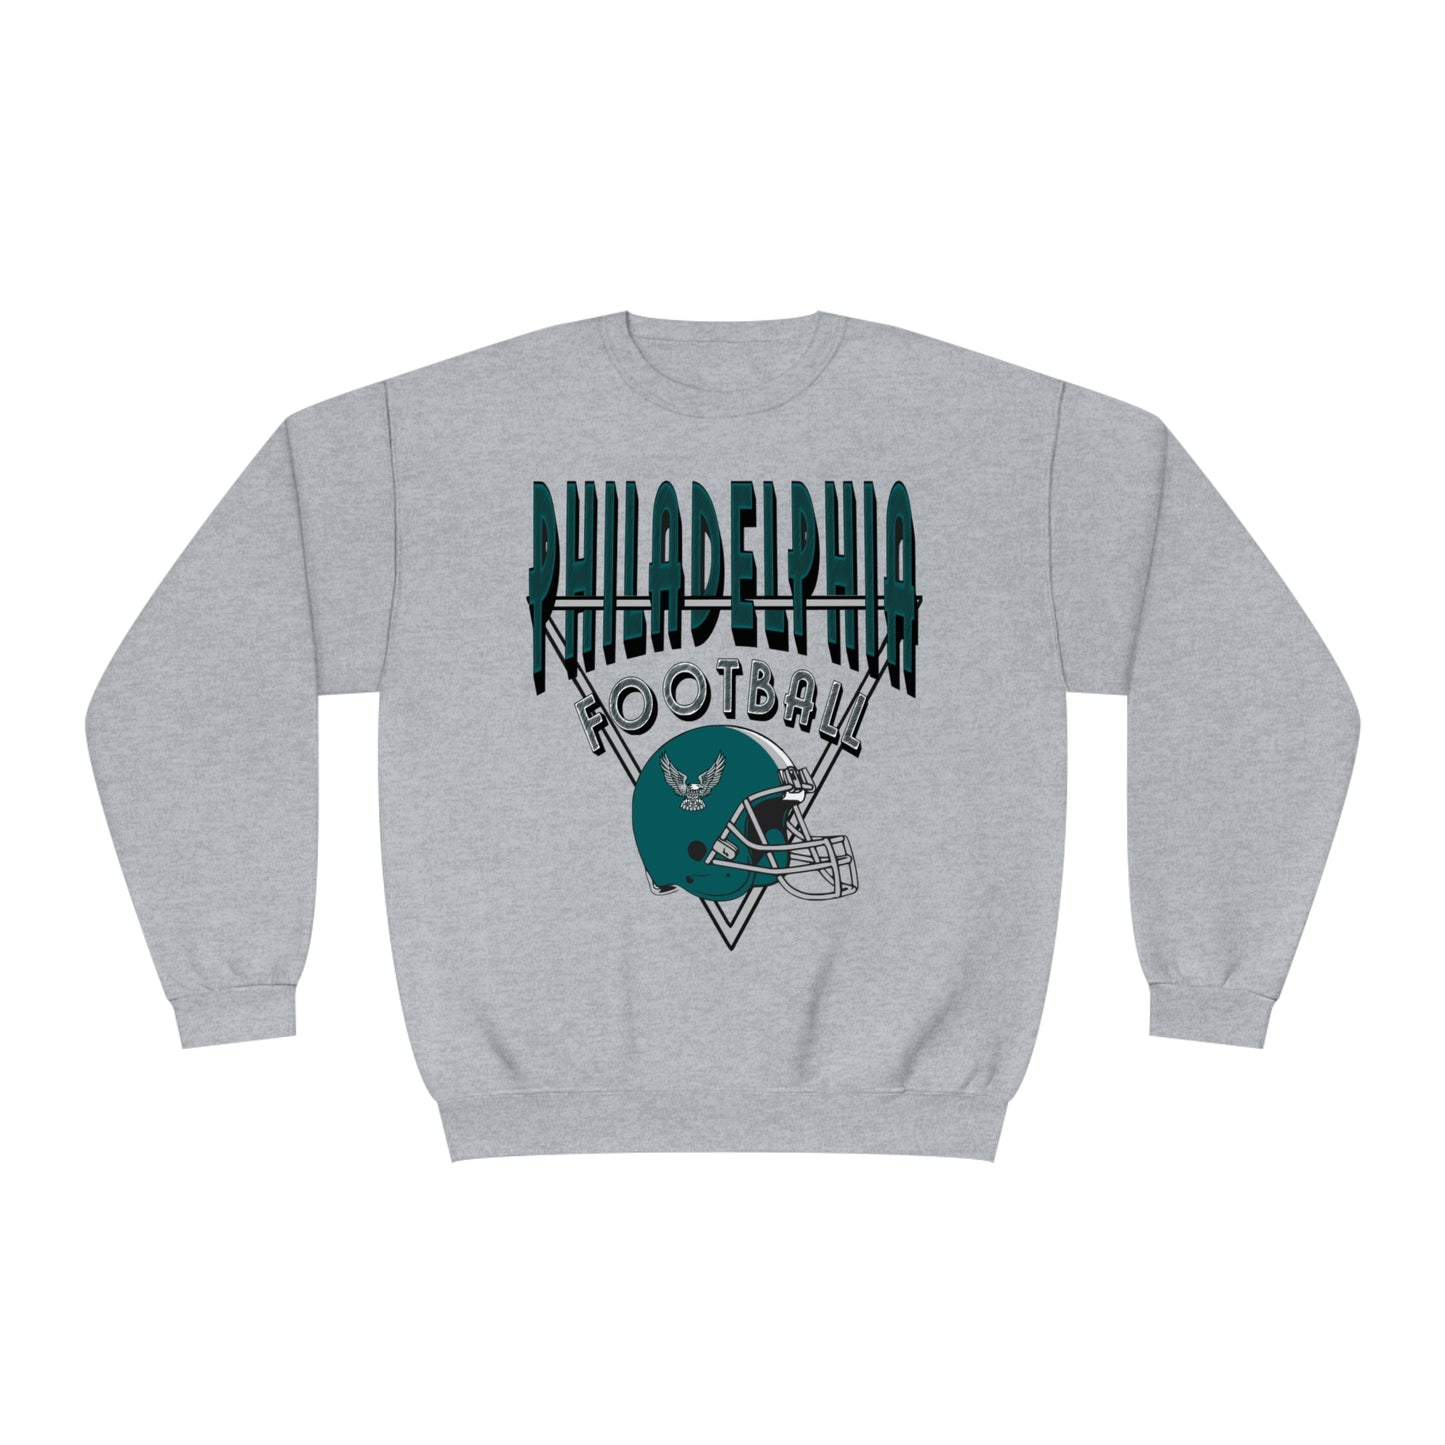 Teal Vintage Throwback Philadelphia Eagles Crewneck - Retro Unisex Football Sweatshirt - Men's & Women's 90's Oversized Hoodie